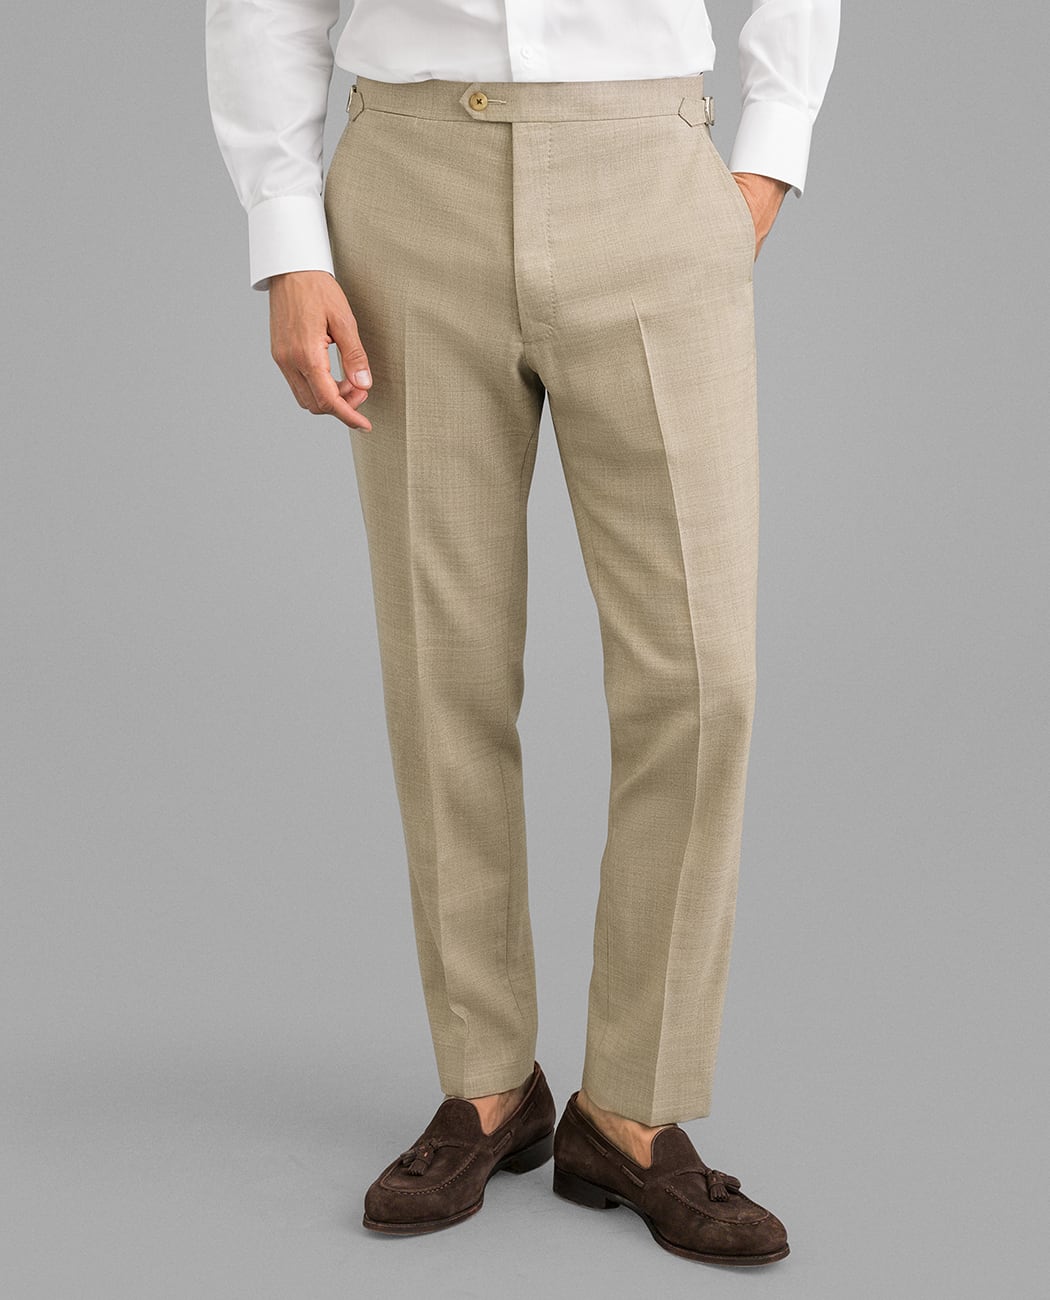 men beige pants outfitTikTok Search